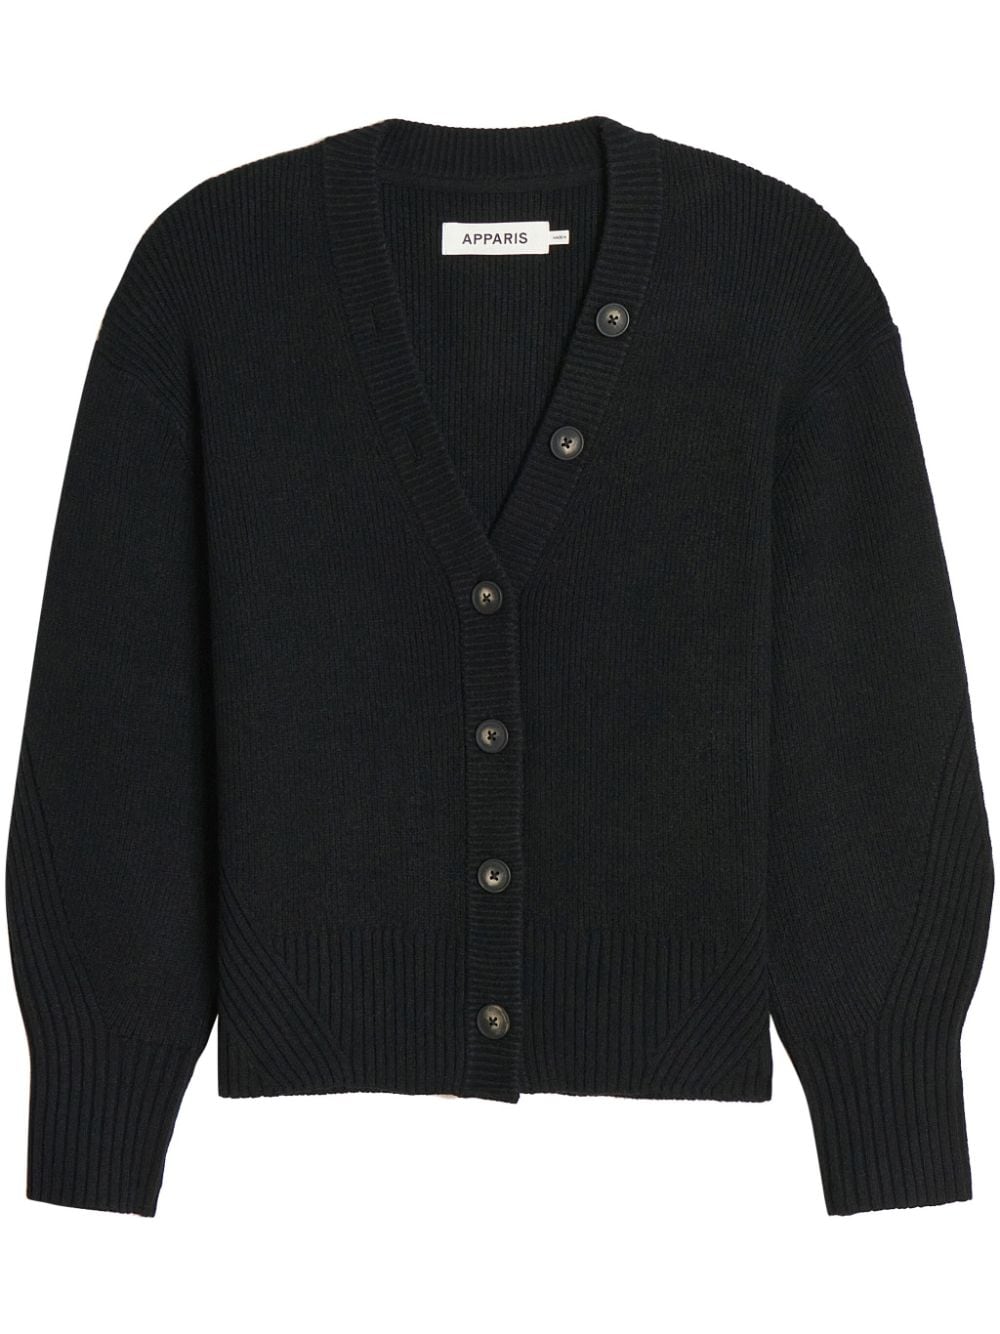 Apparis V-neck knit cardigan - Black von Apparis